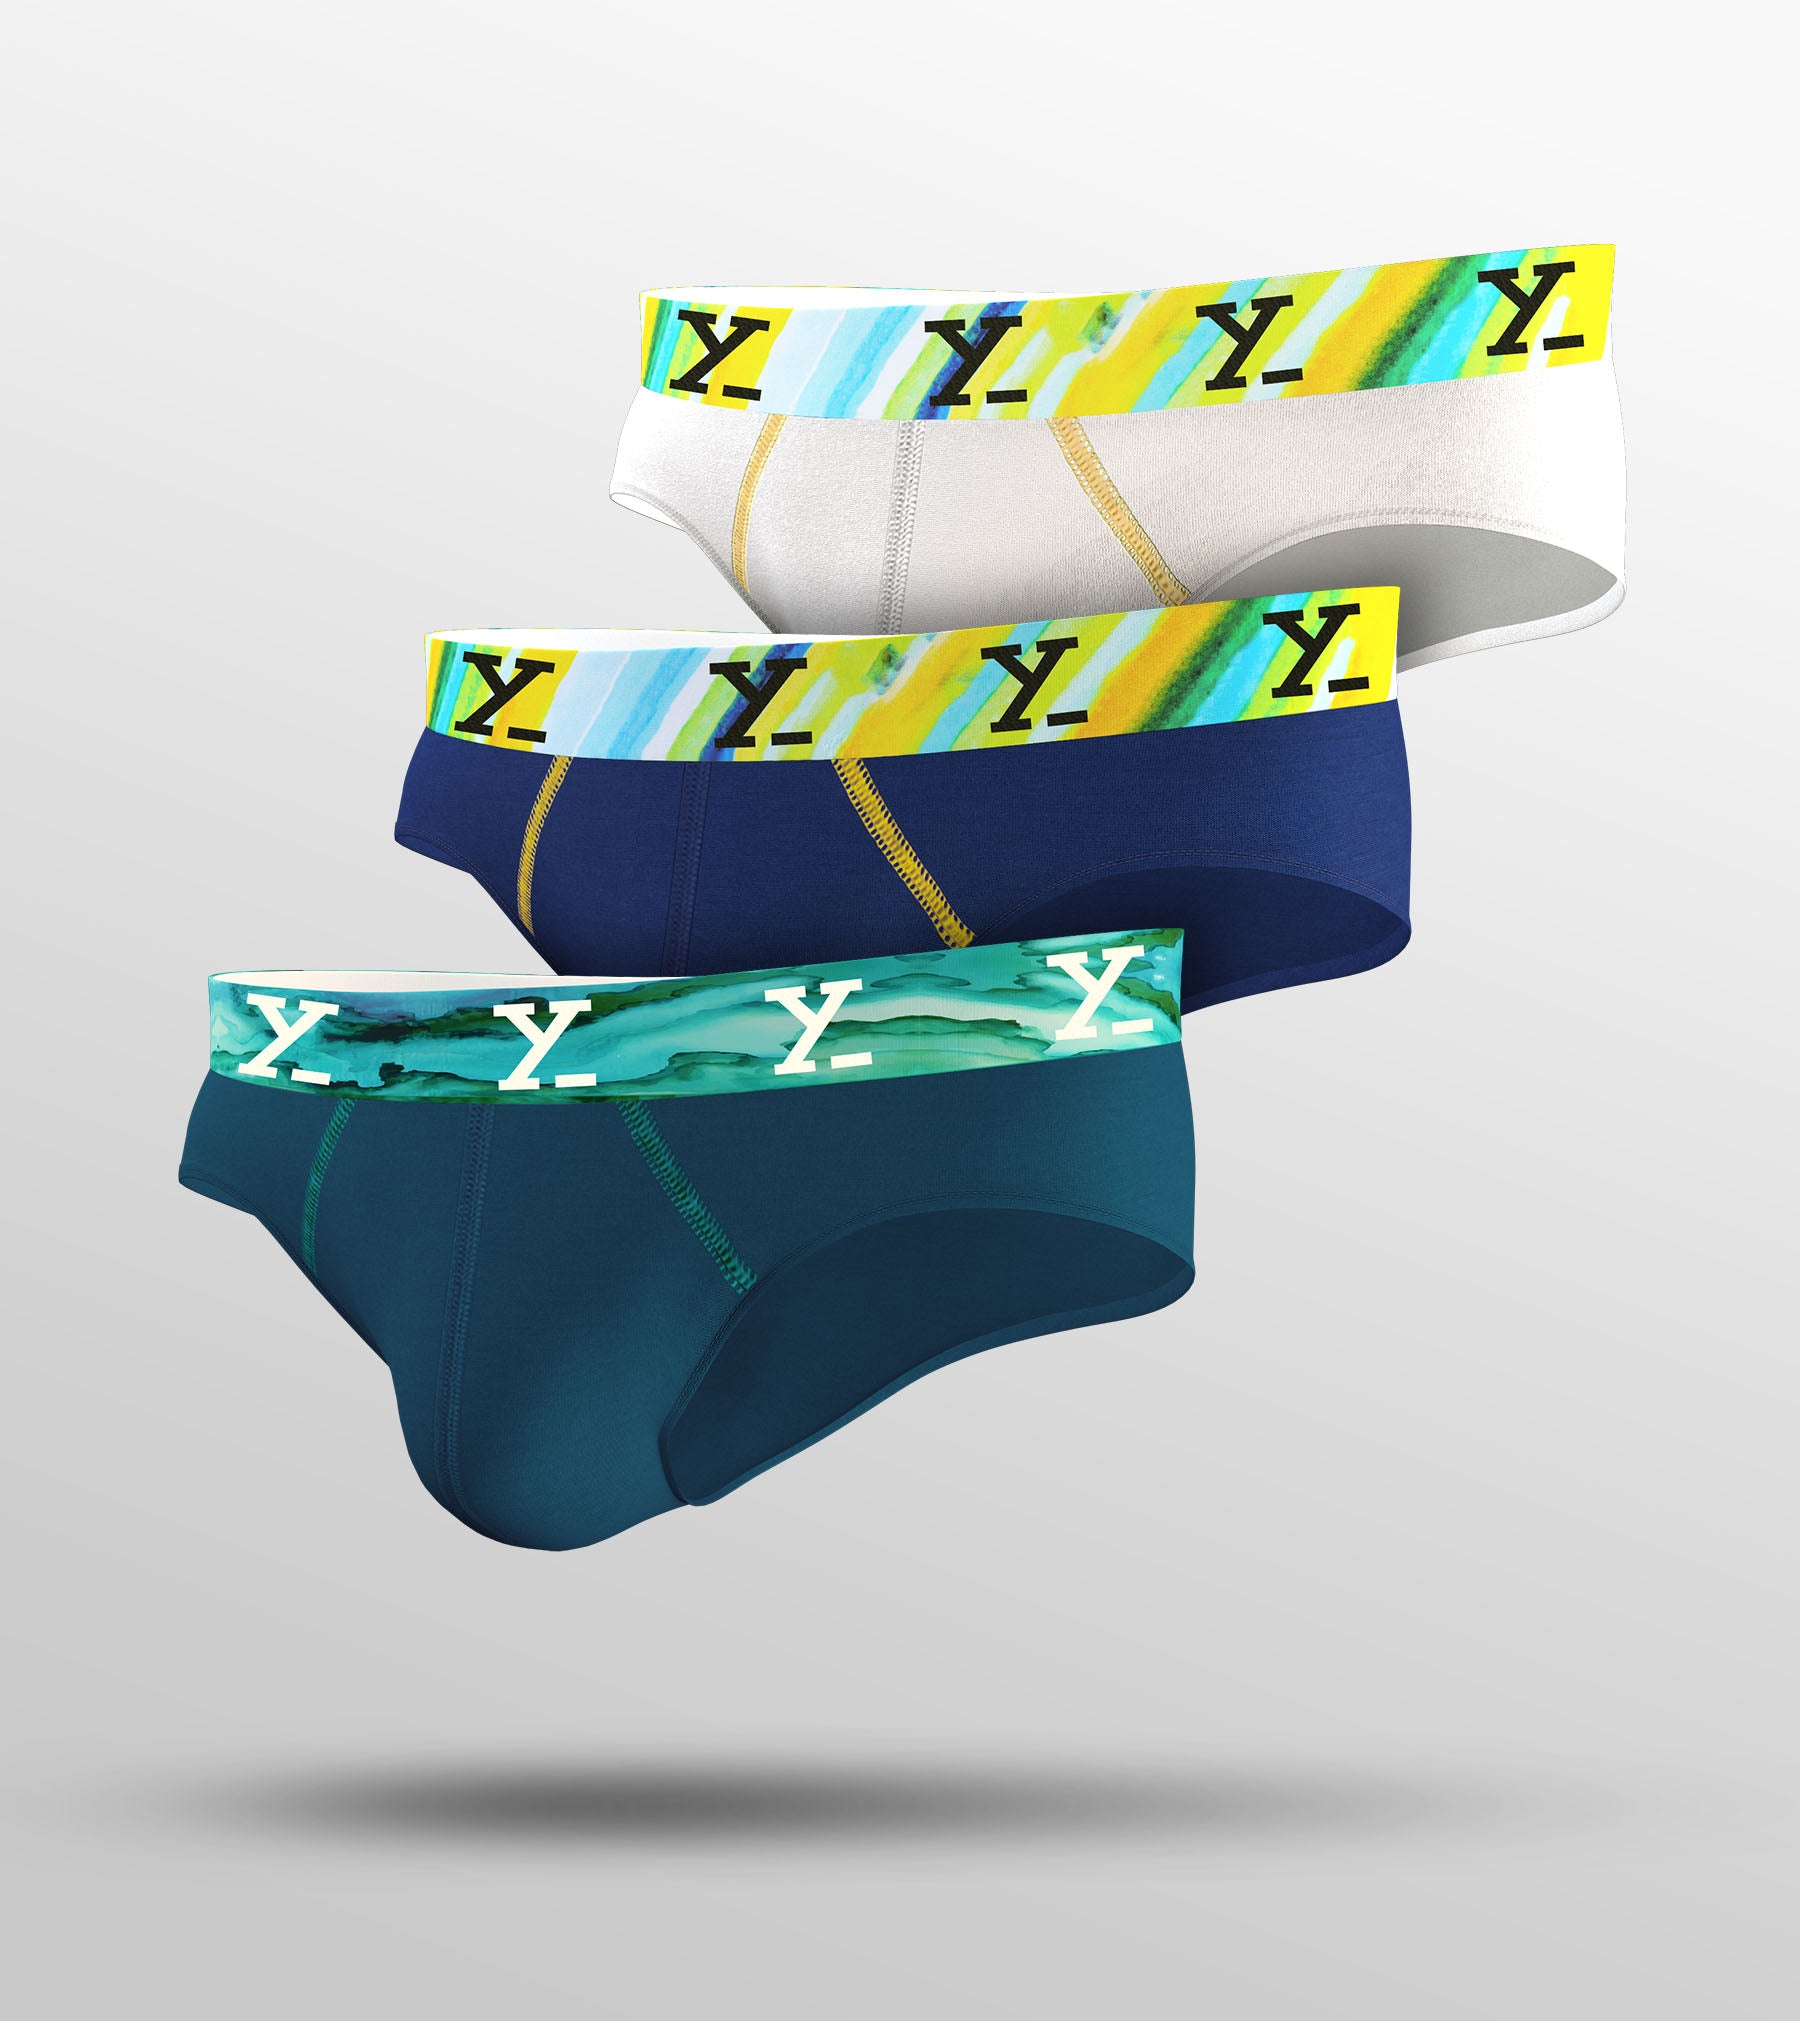 Dynamo Modal Briefs For Men Pack of 3 (Green, Dark Blue, White) -  XYXX Mens Apparels